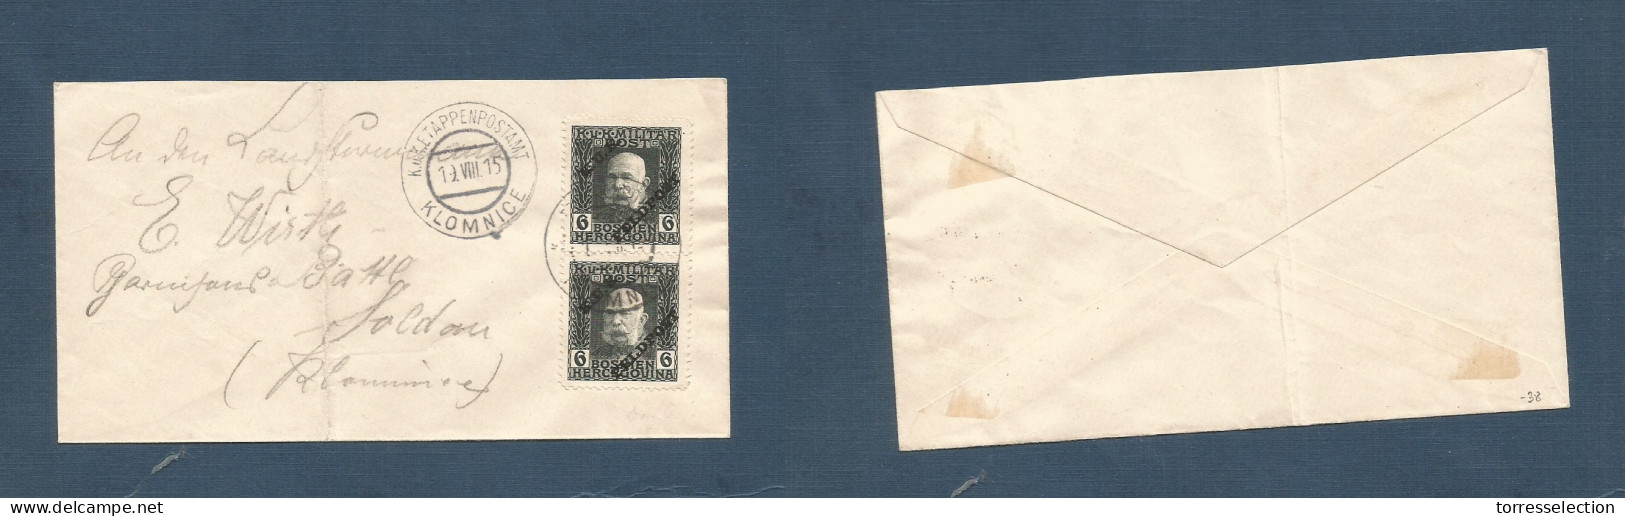 BOSNIA. 1915 (19 Aug) Klomnice Local Multifkd Issue Envelope 12k Rate, Tied Cds. XSALE. - Bosnia Herzegovina